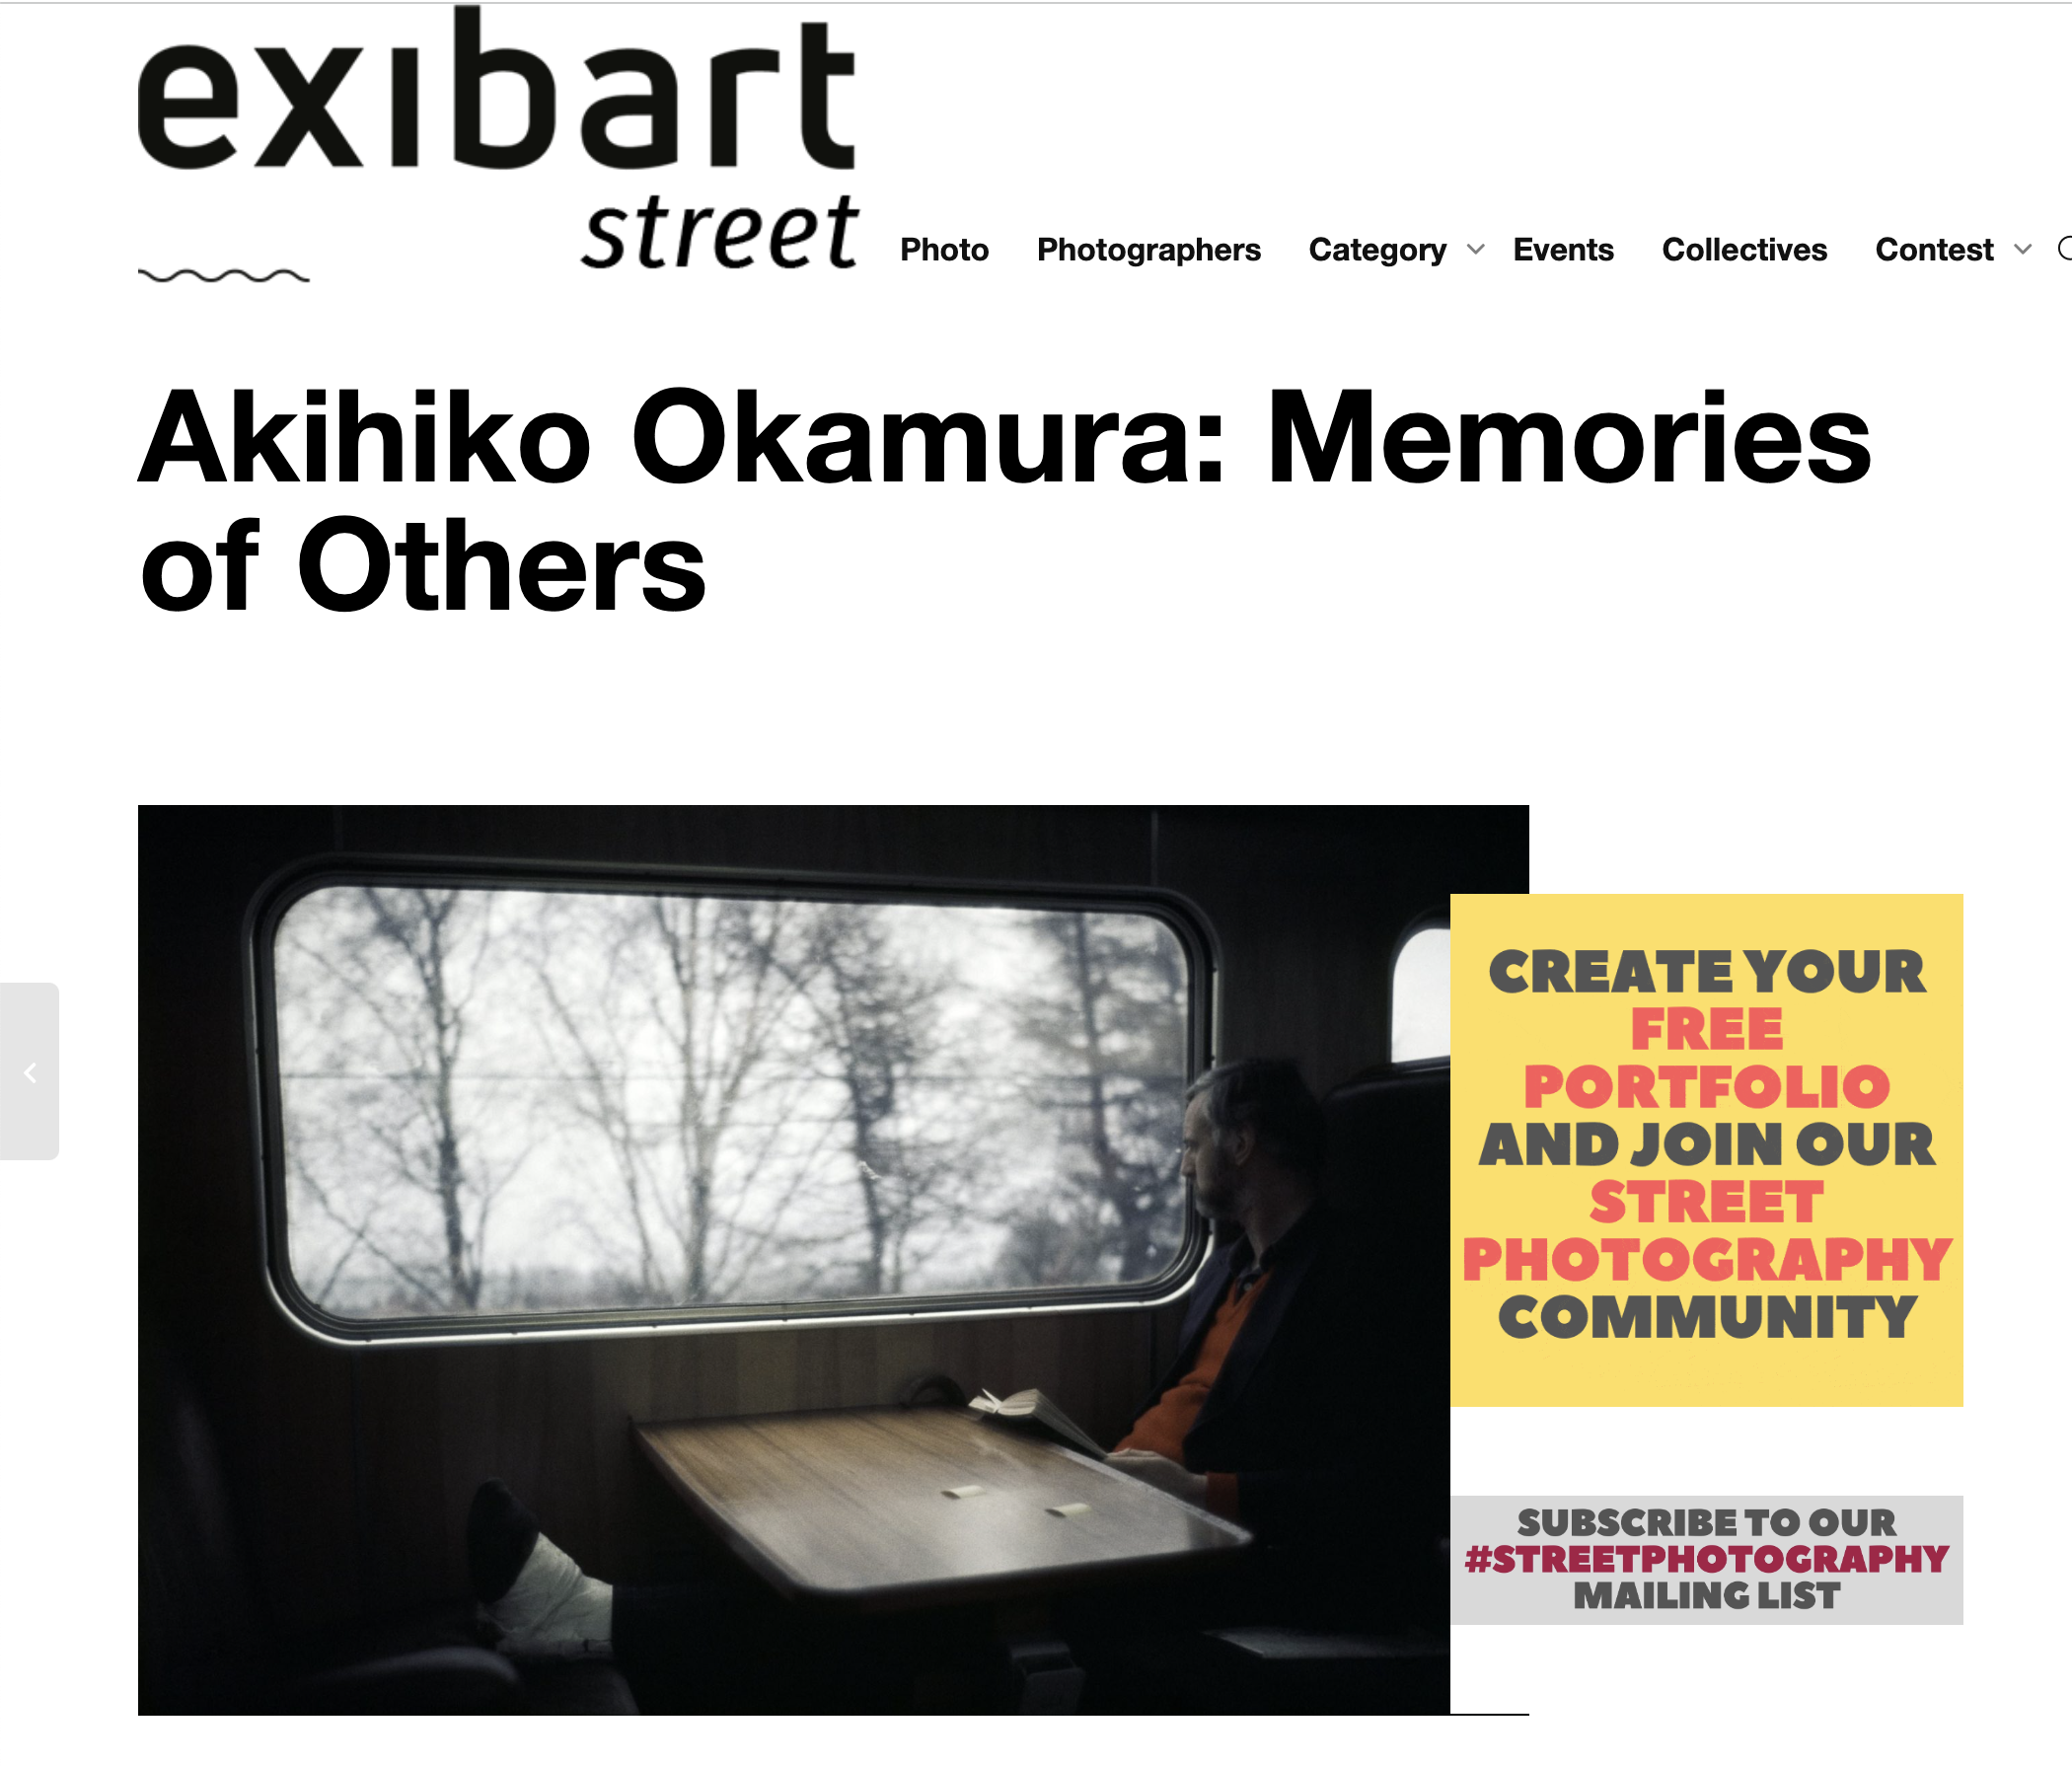 Exibart Magazine | Exhibart Street